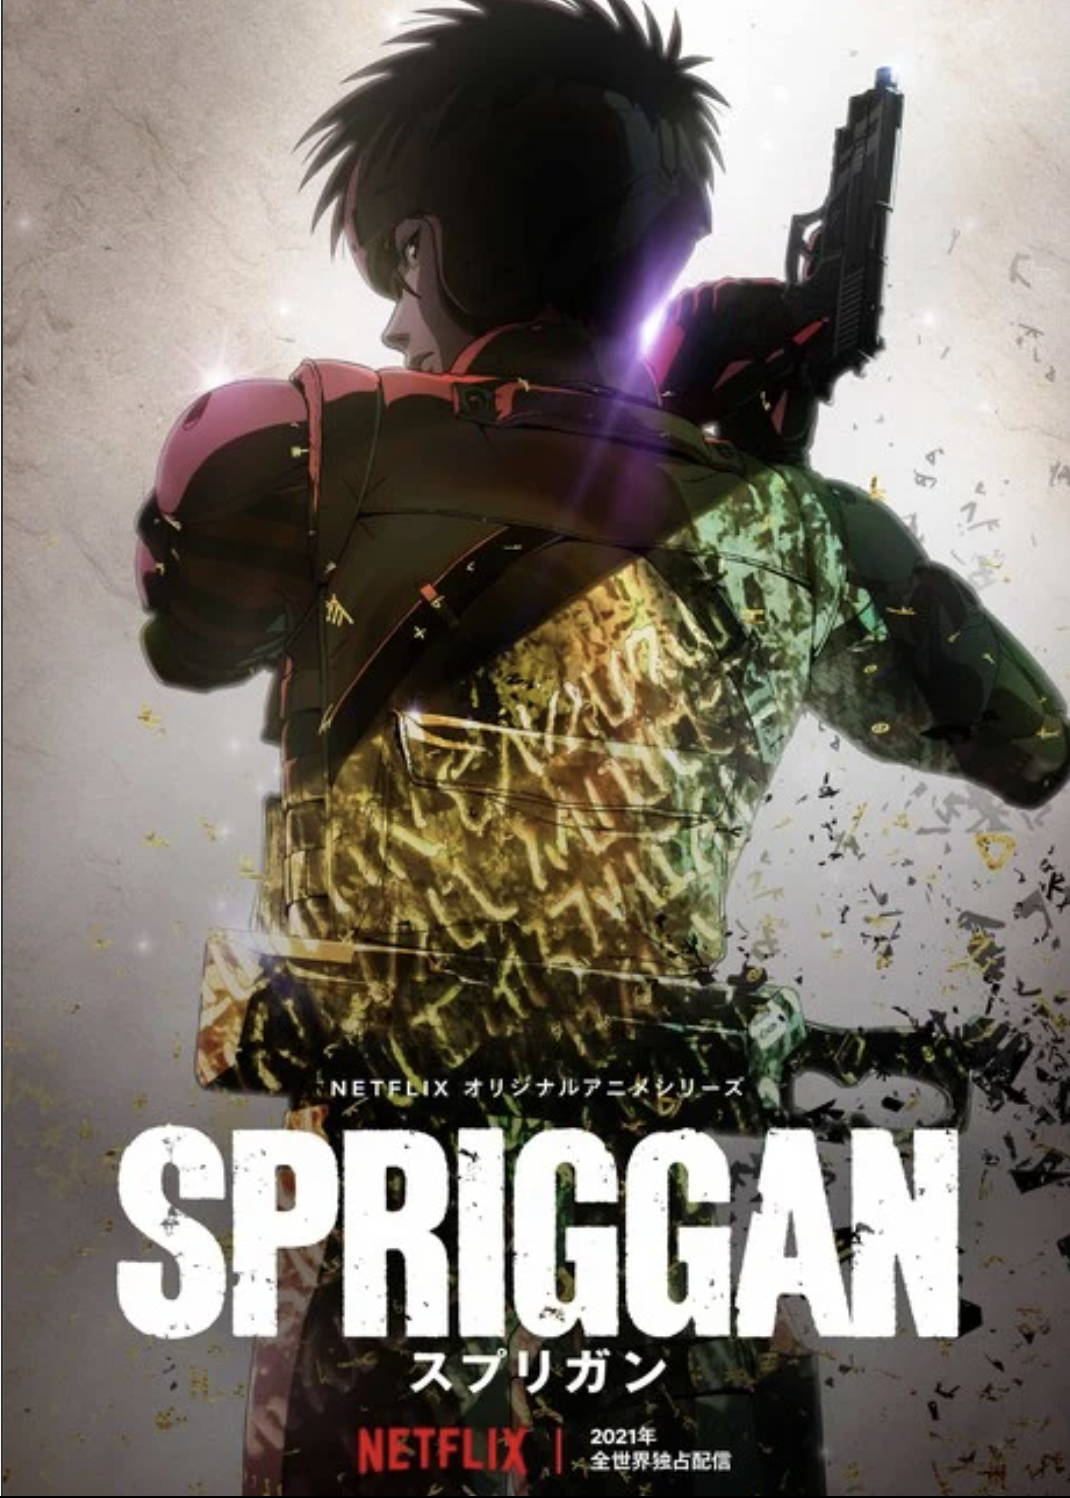 Spriggan-Netflix "Spriggan" Announces Additional Cast, Starting in 2022!